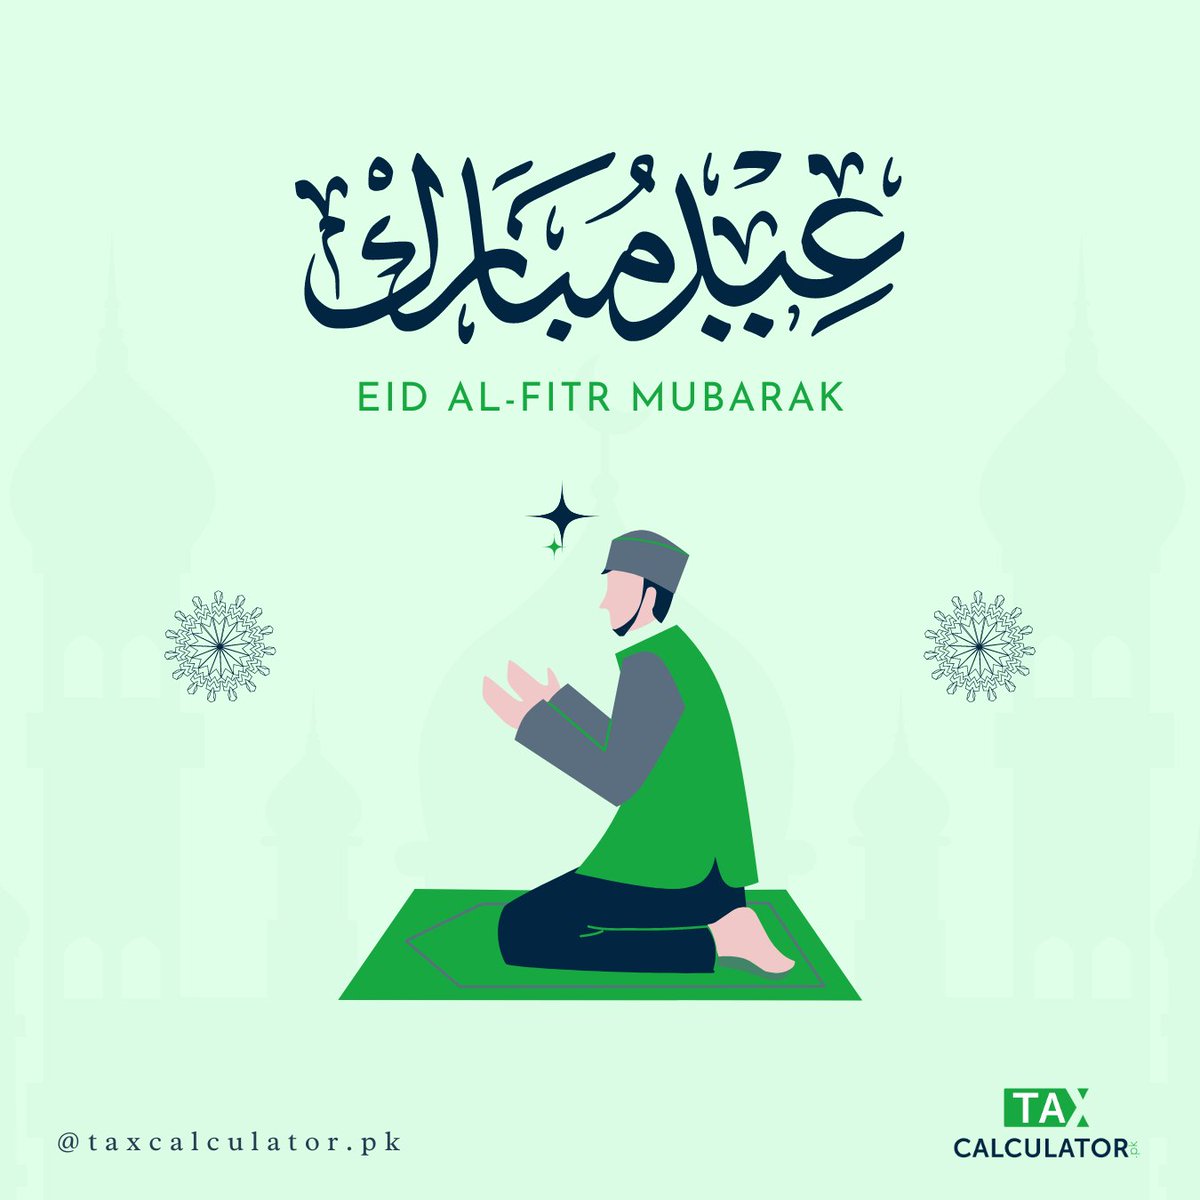 Eid Mubarak! Wishing you all a joyous and blessed Eid-ul-Fitr. May this special day bring you happiness, prosperity, and peace.
#Eid #EidUlFitr #EidMubarak #MuslimFestivals #Eid2023 #EidWithImranKhan